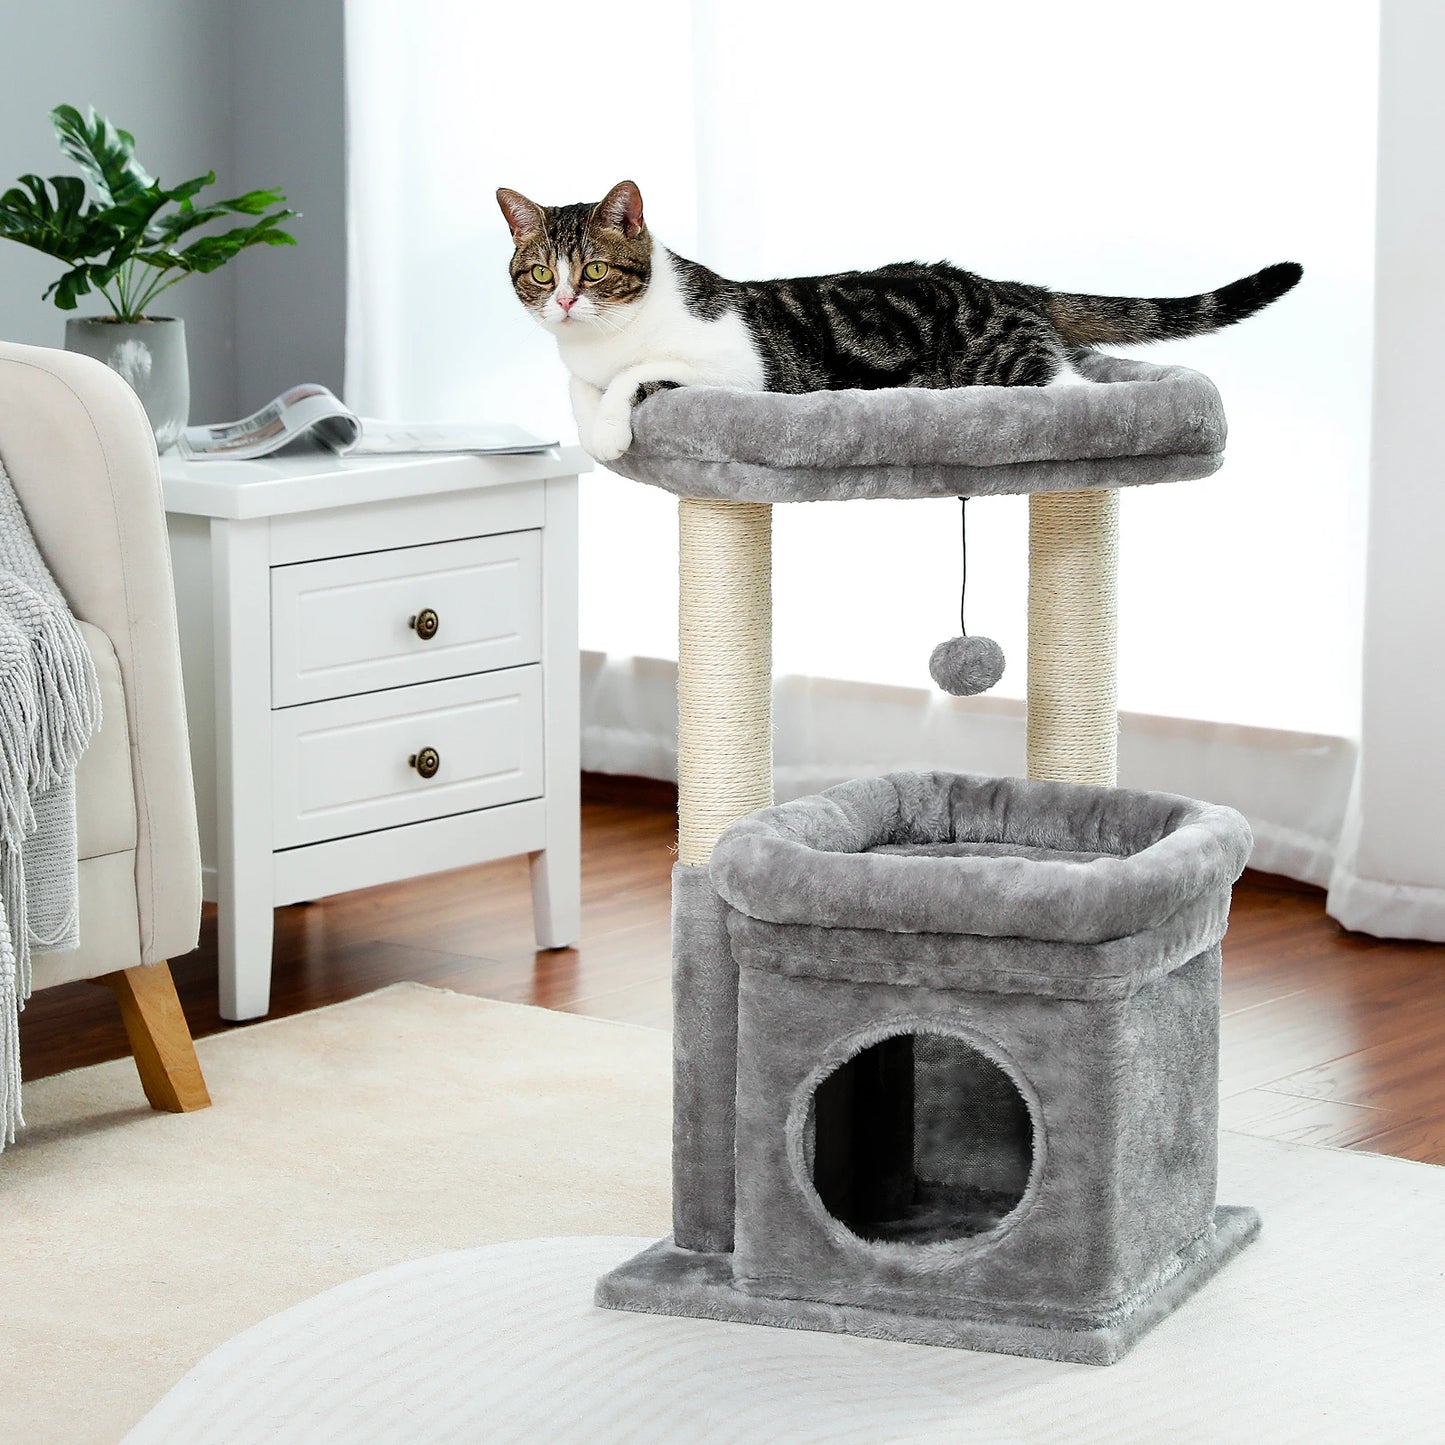 Petite Cat Tree Tower